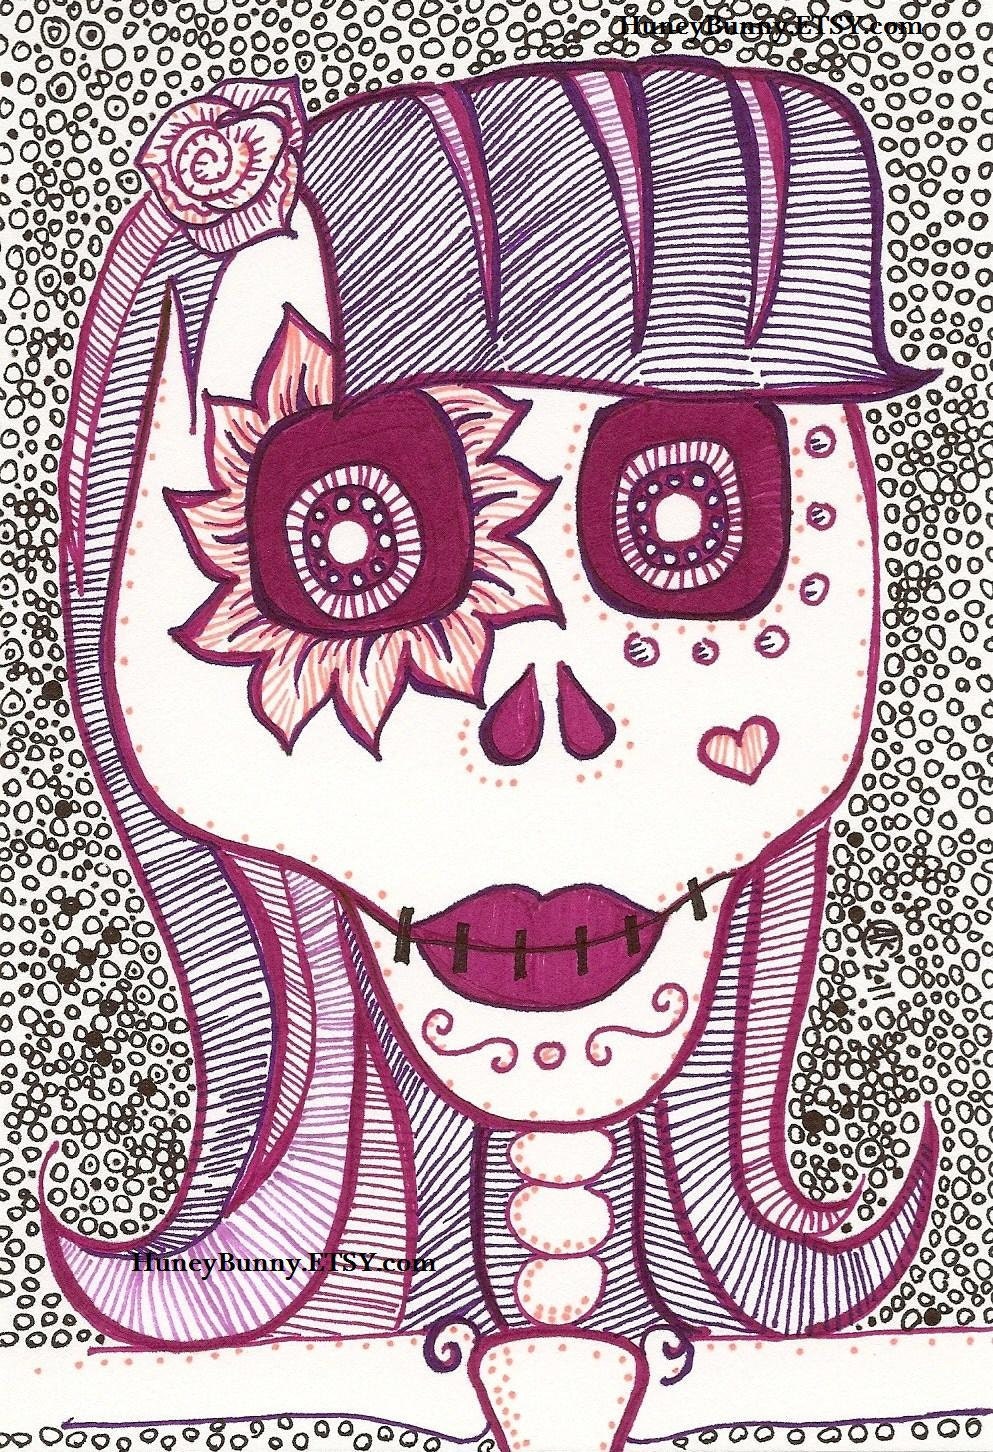 Original DaY Of The Dead Drawing. Sugar Skull artwork with Sharpies. Lady Skeleton. Dia De Los Muertos.